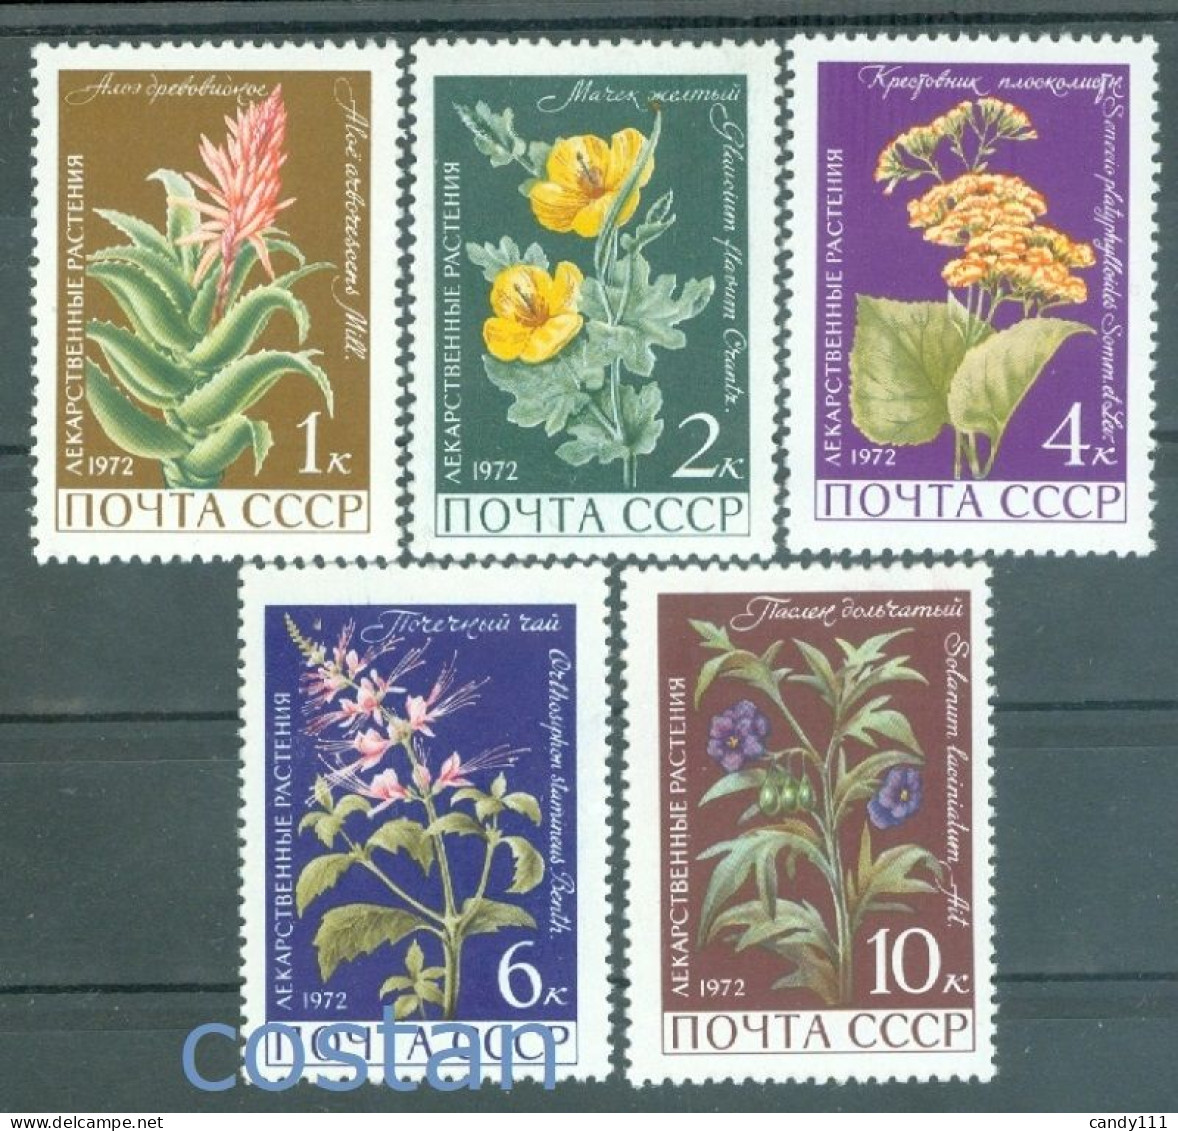 1972 Medicinal Plants,krantz Aloe,sea Poppy,poroporo,Orthosiphon,Russia,3988,MNH - Heilpflanzen